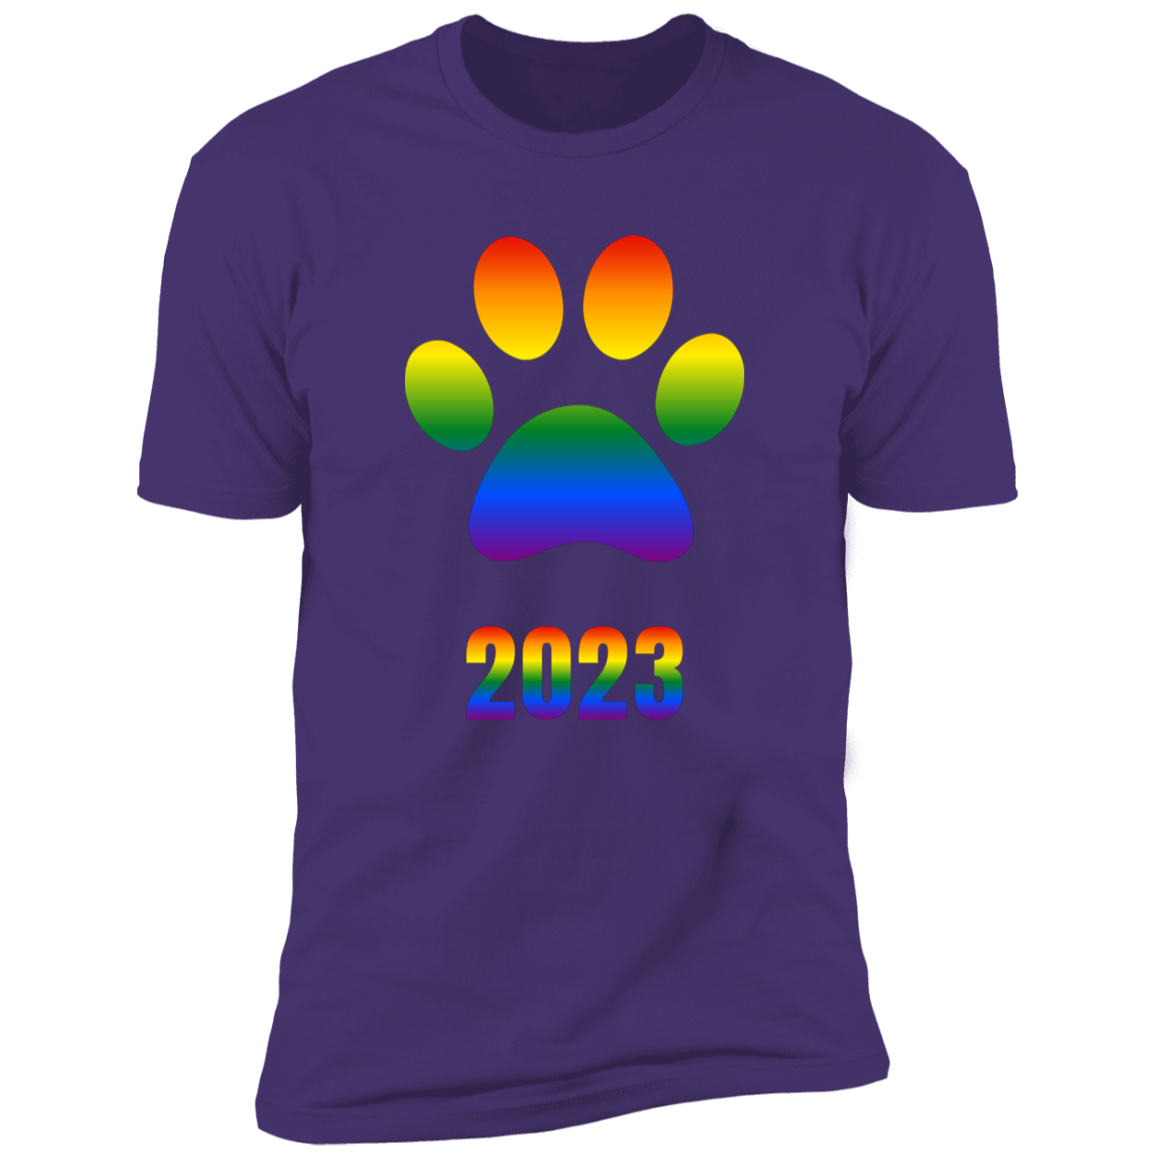 Dog Paw pride 2023 t-shirt, dog pride dog shirt for humans, in purple rush